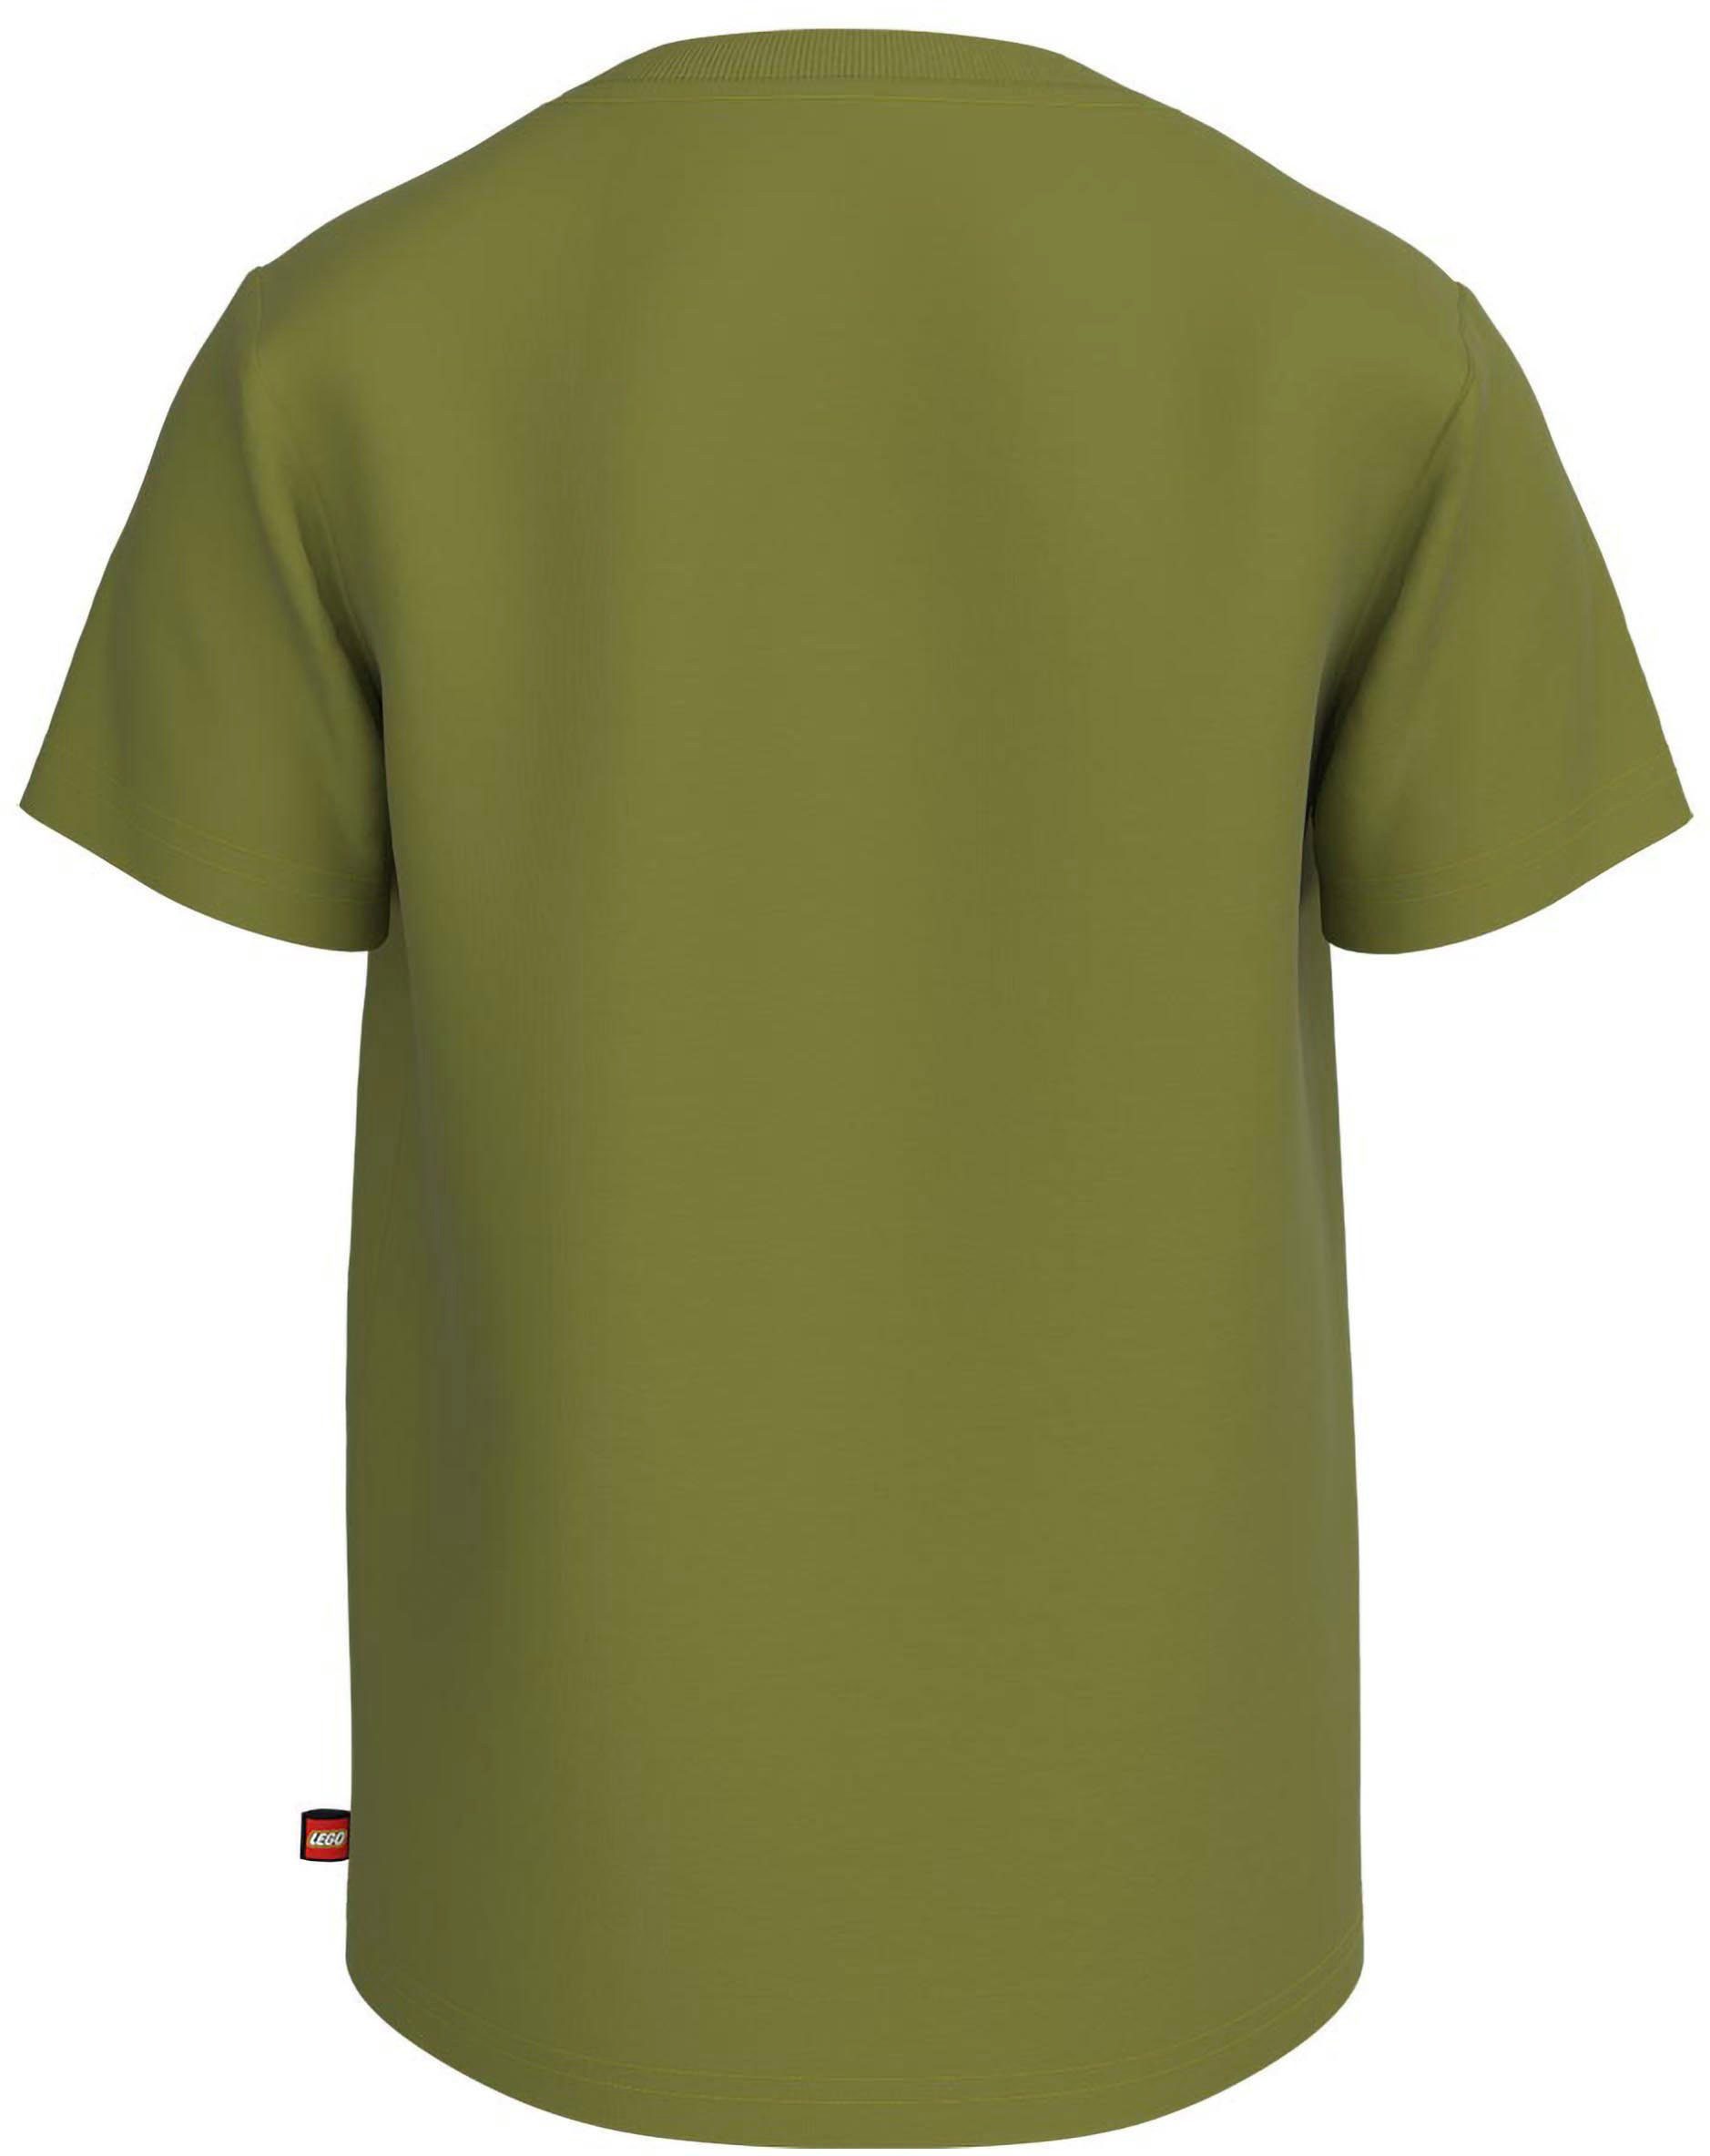 Print-Shirt LEGO® Wear green olive